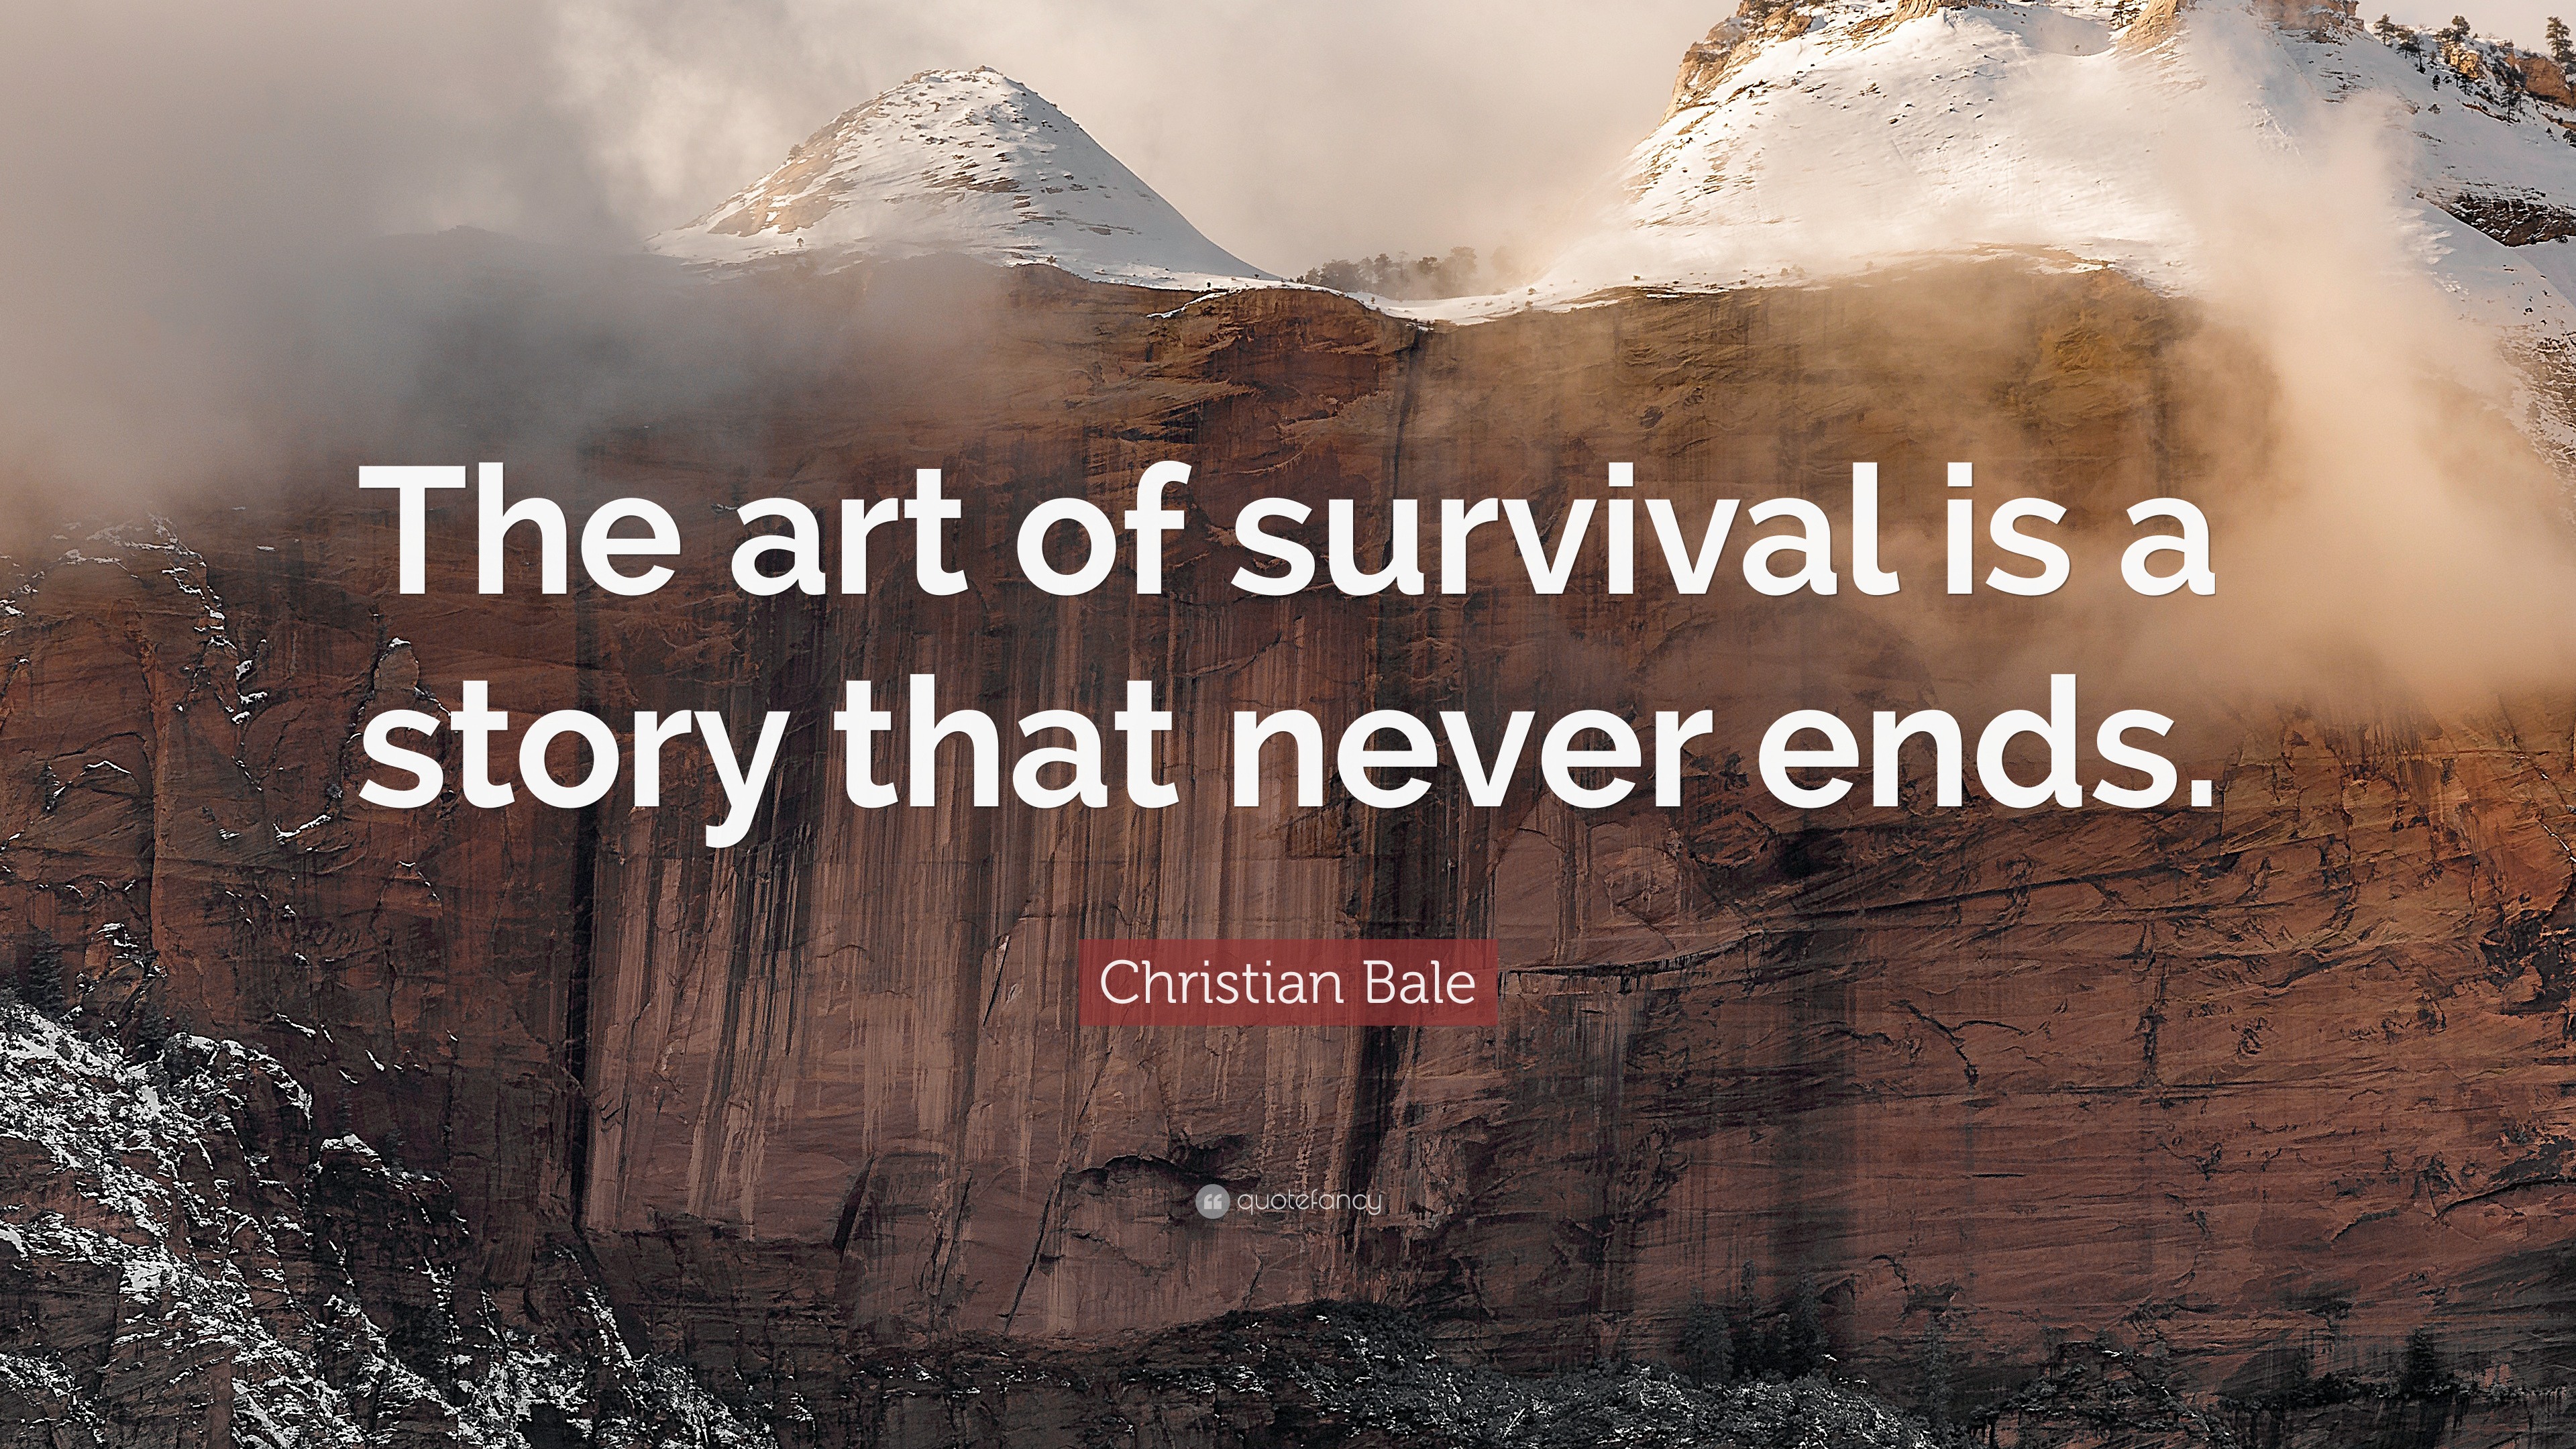 The Art of Survival, survival 